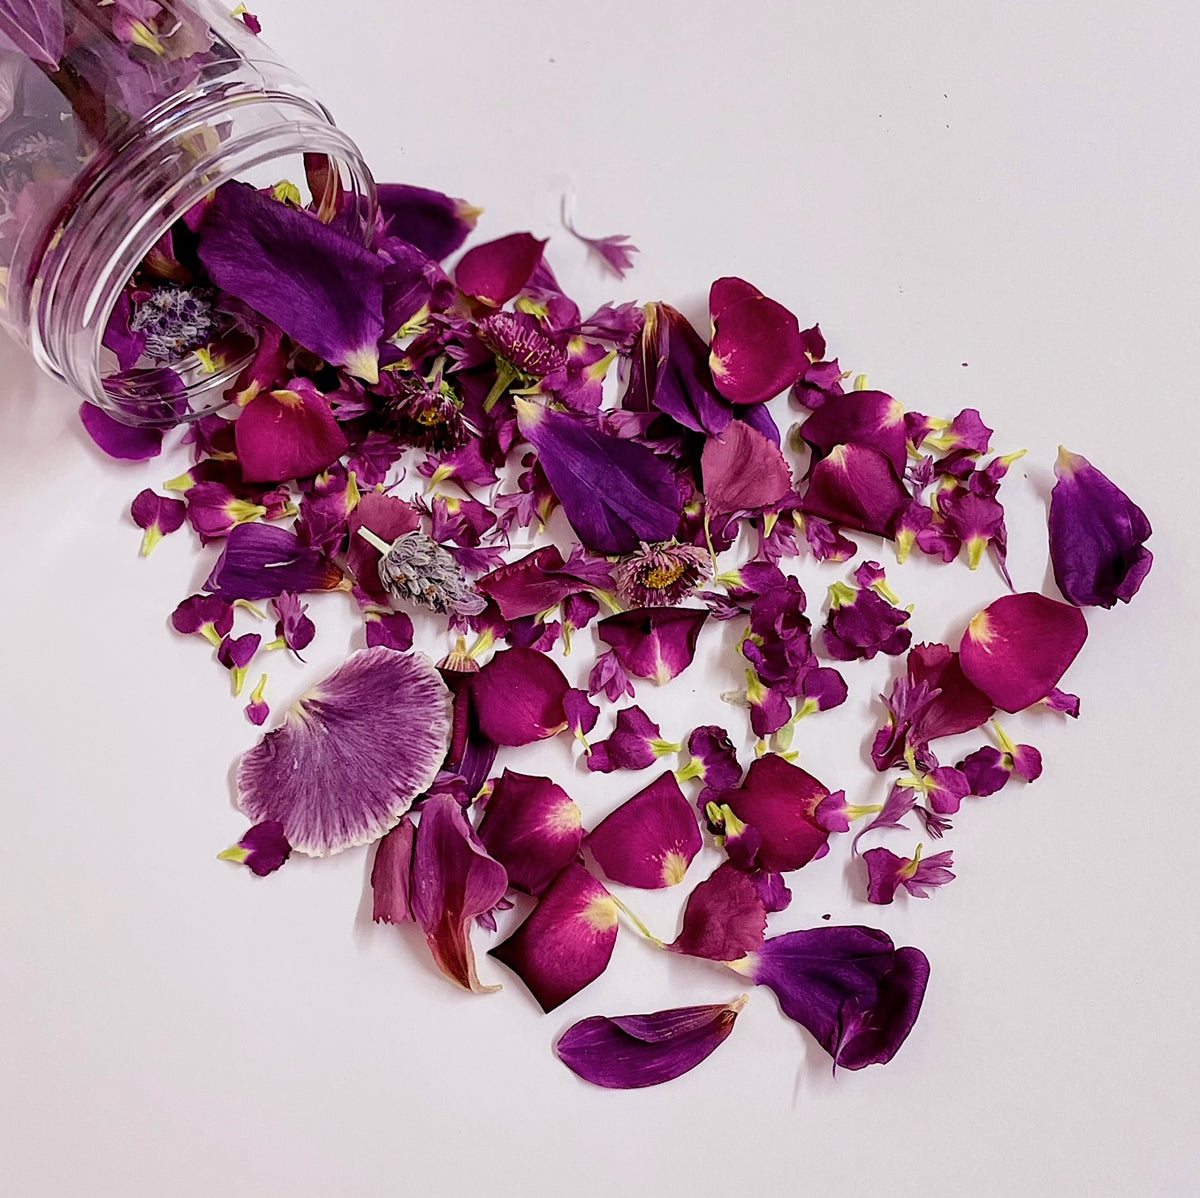 BURGUNDY BLOOM FLOWERFETTI® - Freeze Dried Edible Flower Confetti